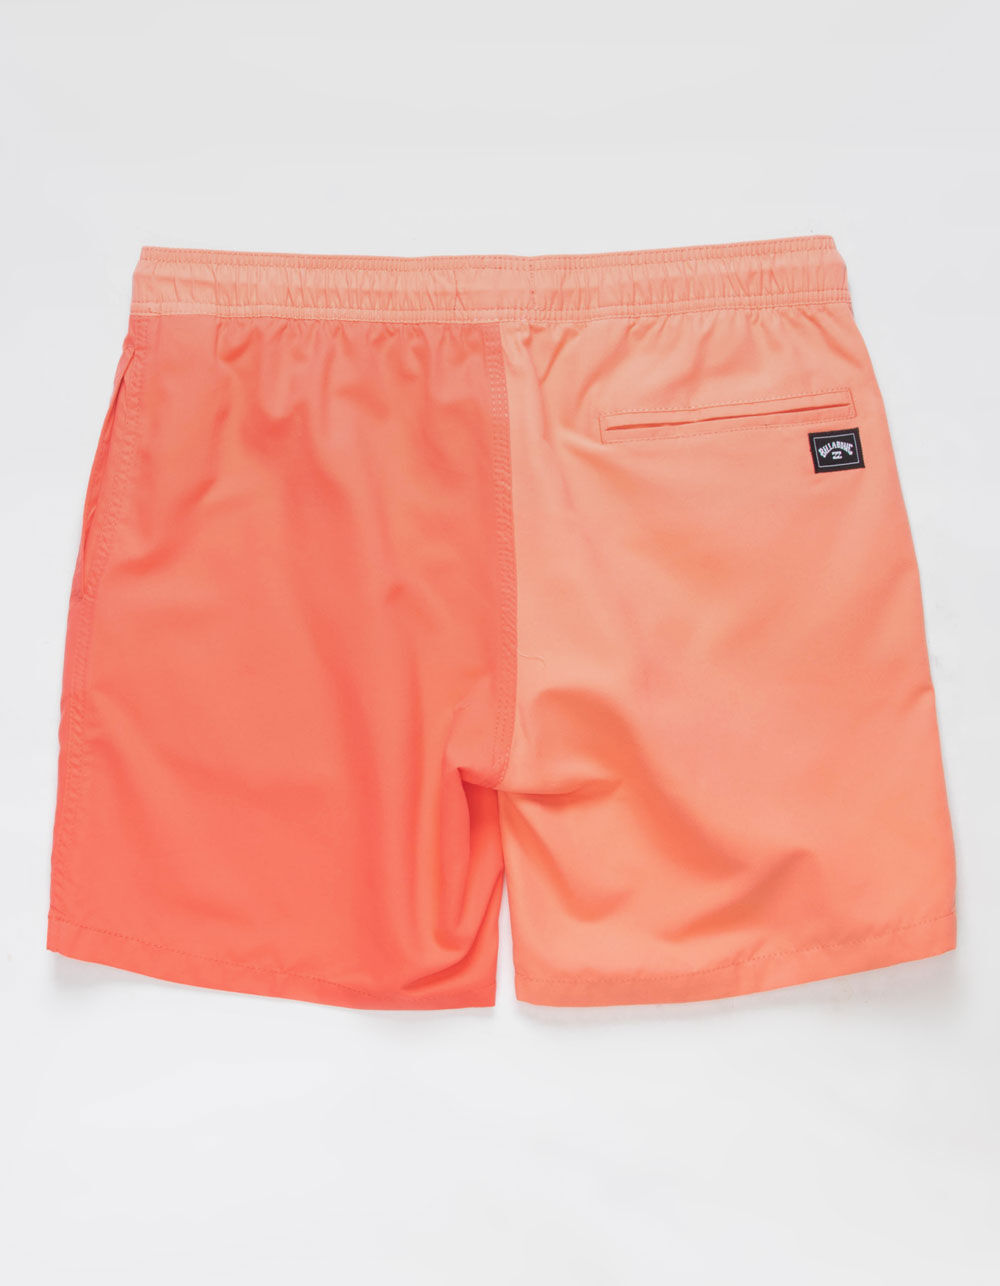 Buy Wunderlove Orange Self-Patterned Beach Shorts from Westside